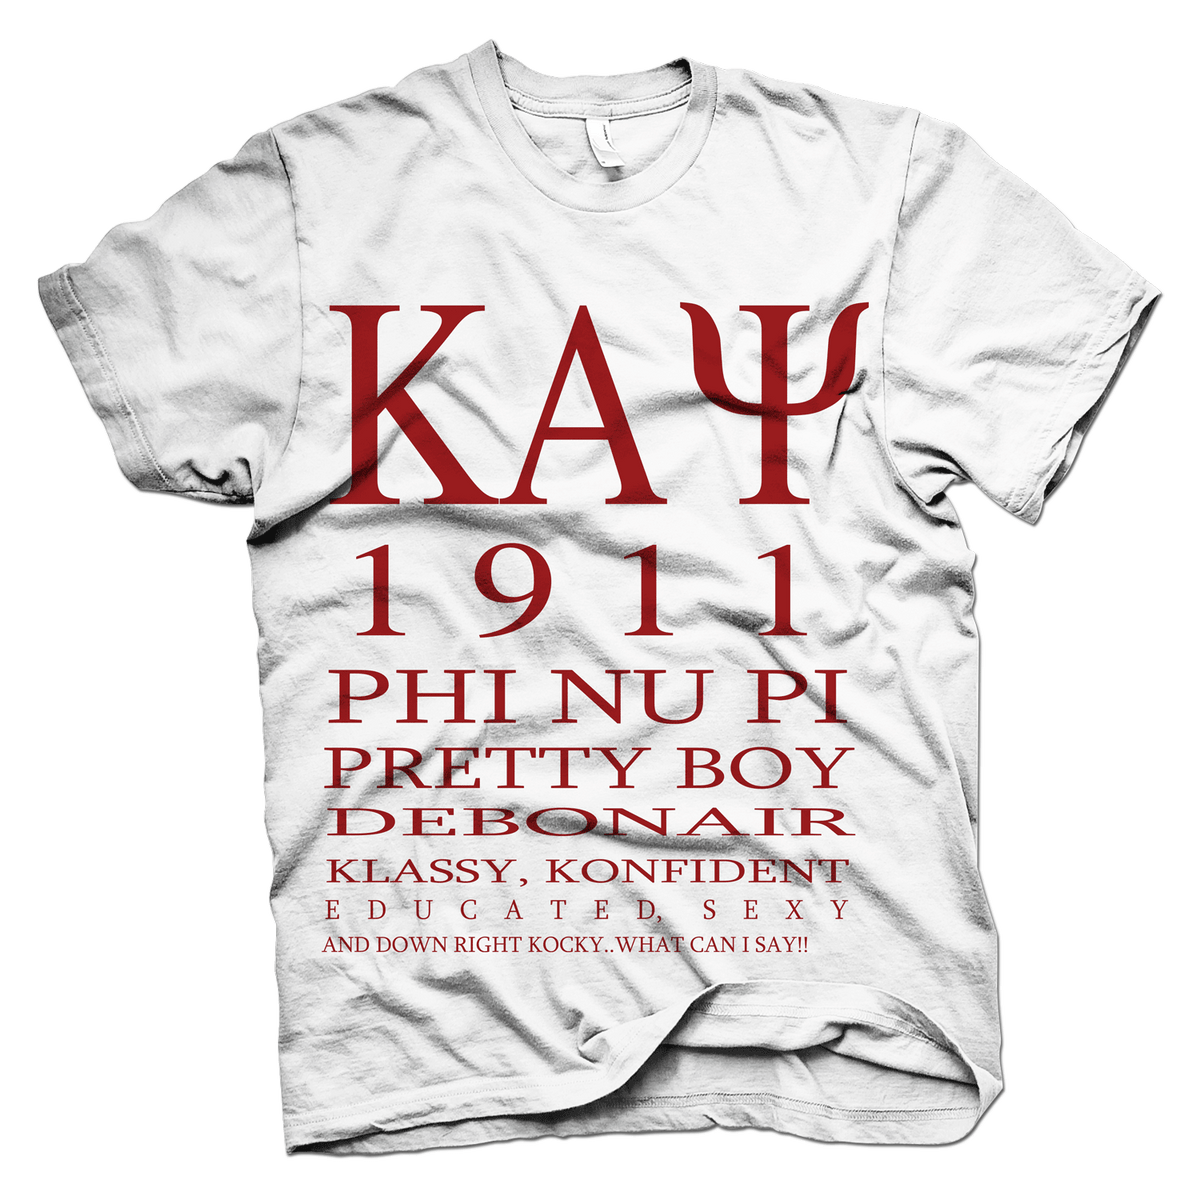 Kappa Alpha Psi Screen Printed T-Shirt with Porsche Inspired Logo, White